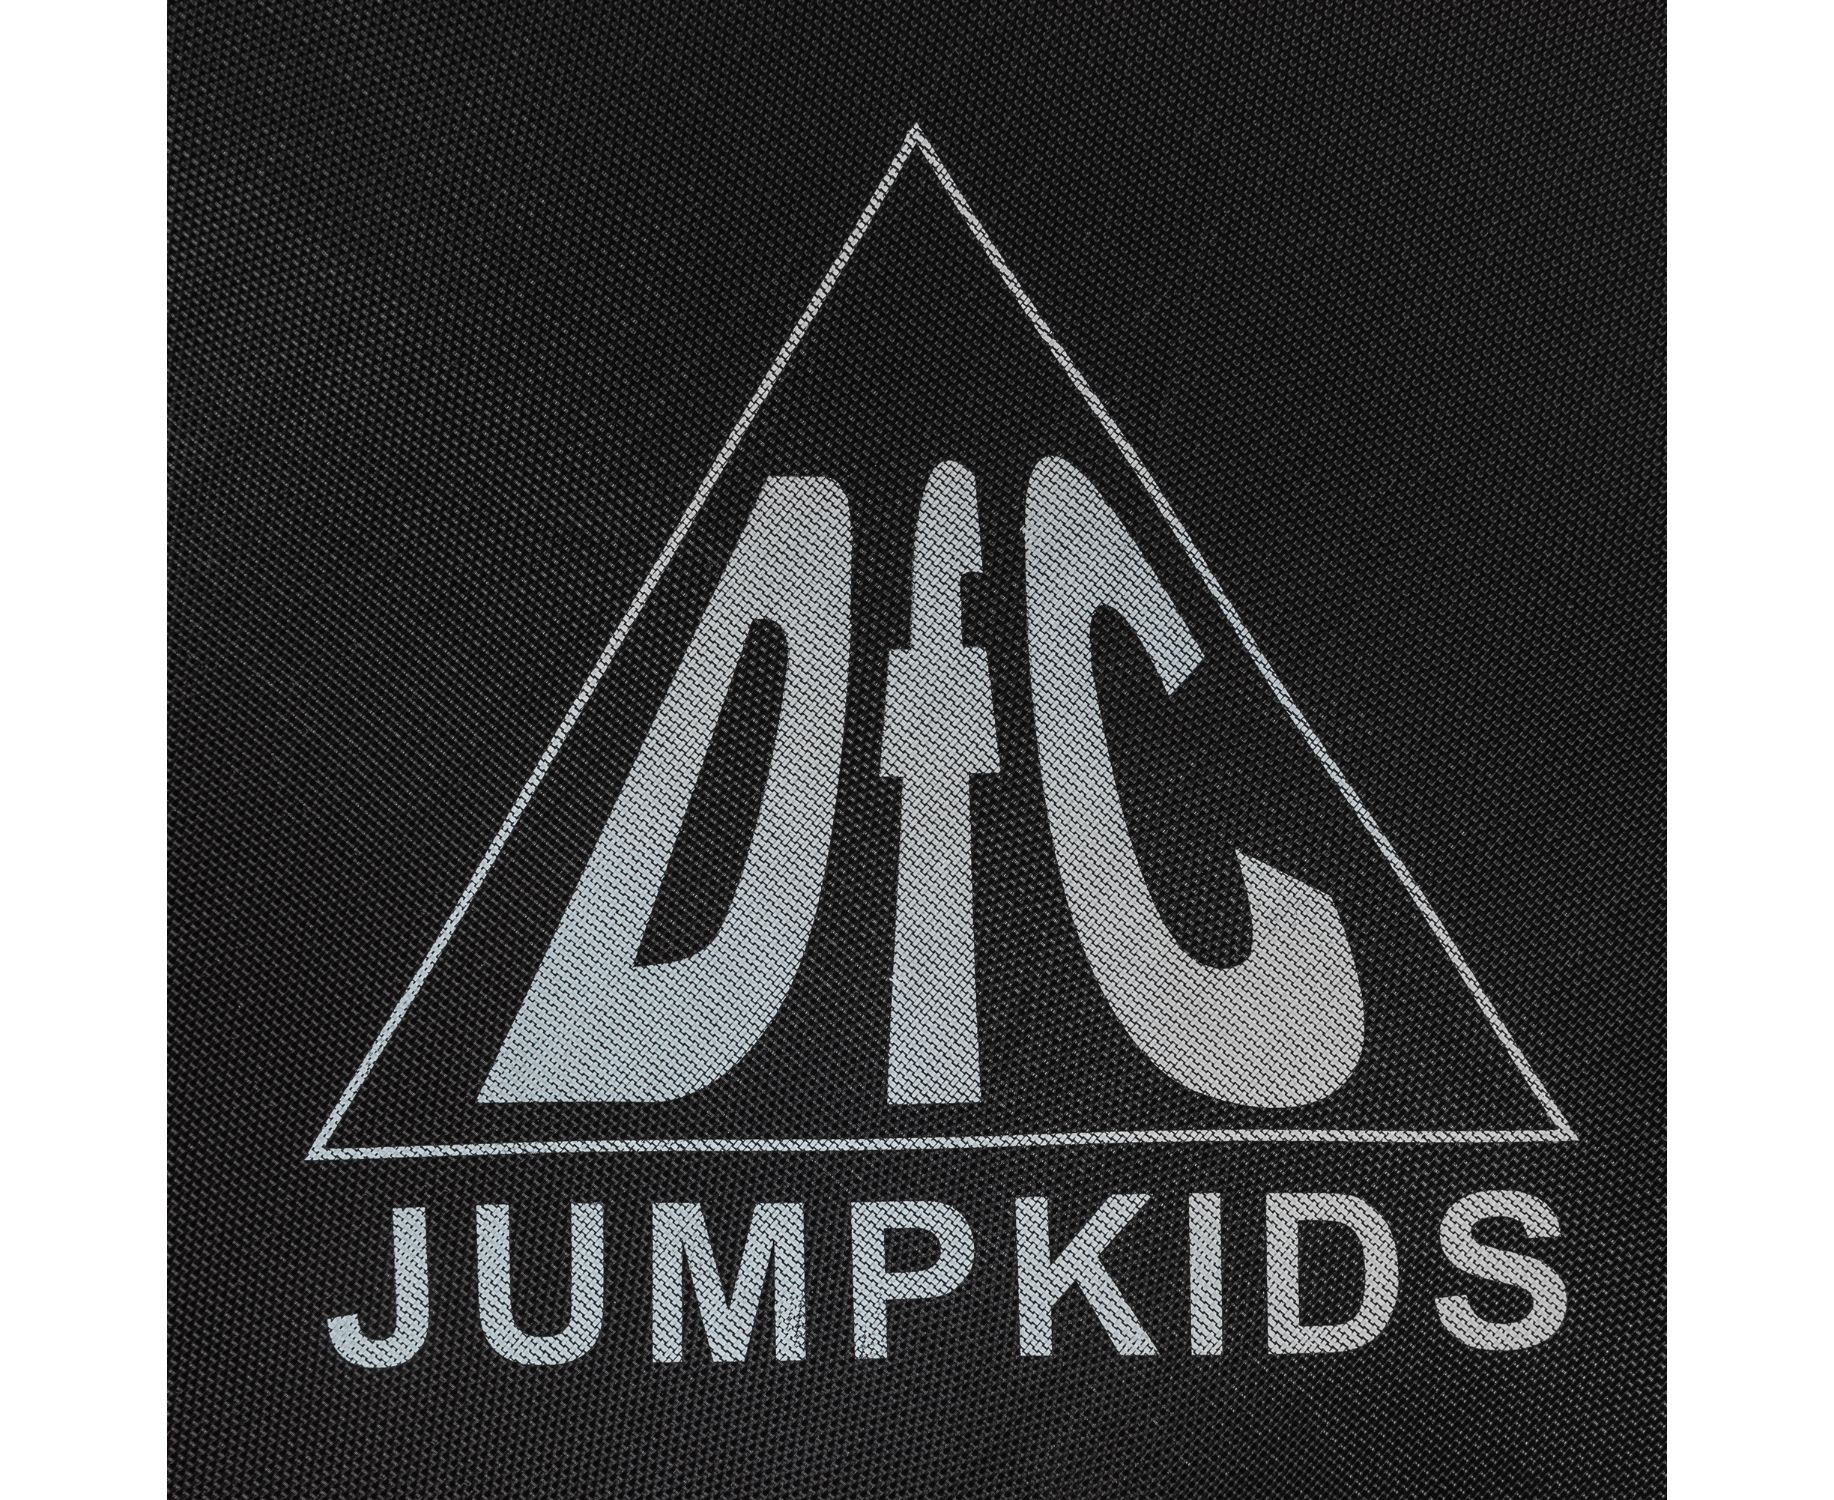 Батут DFC Jump kids 48" (120см) 48INCH-JD-P розовый 1834_1500